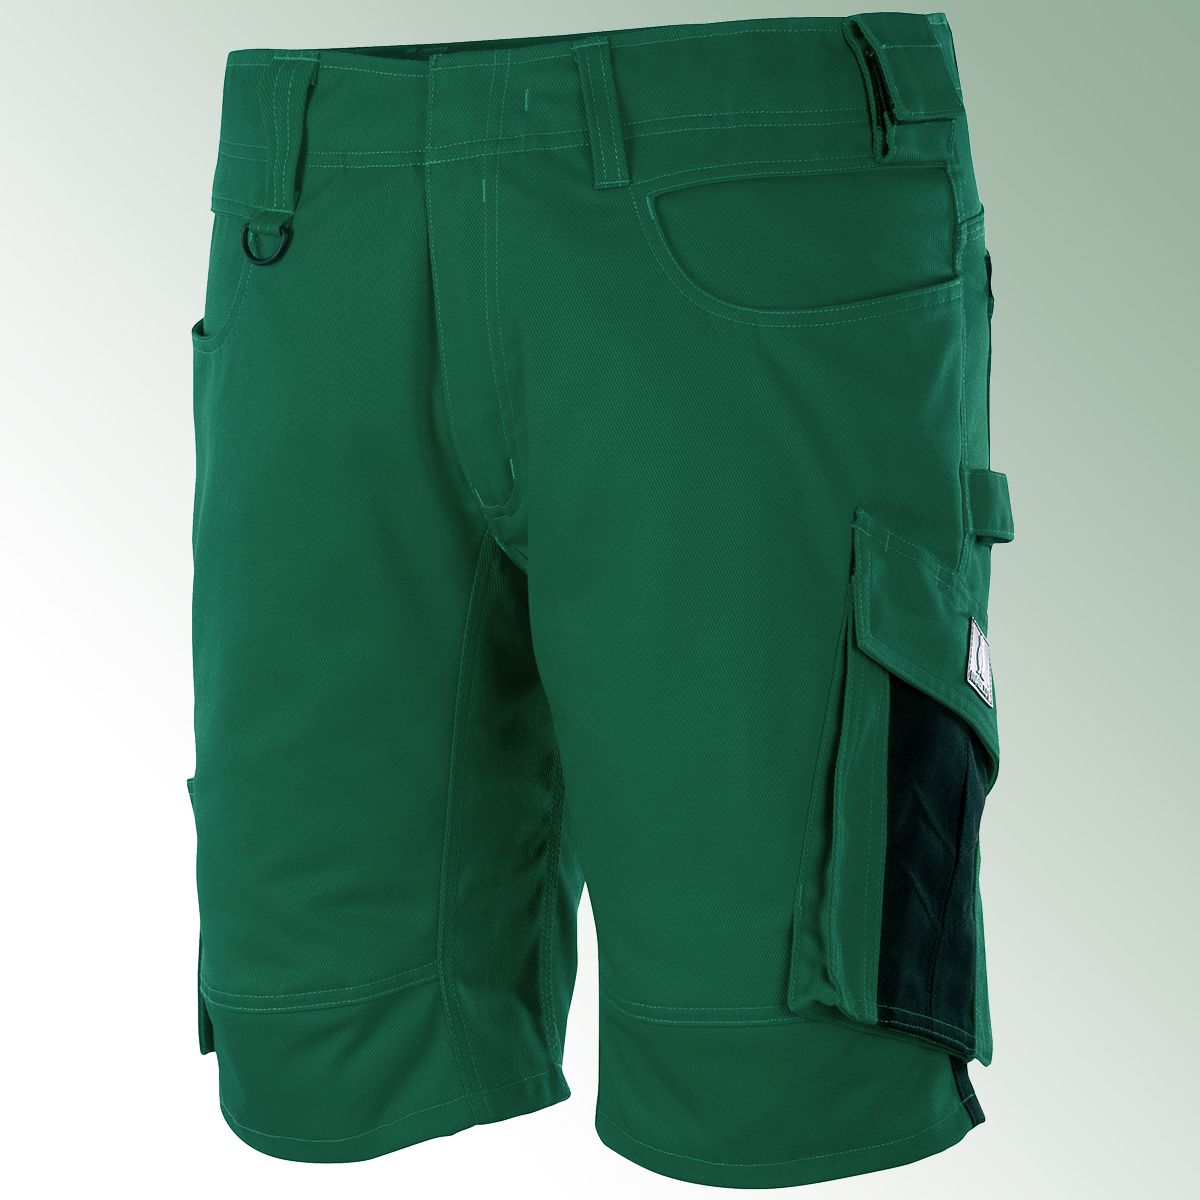 Work Shorts Stuttgart Size 50 Green / Black